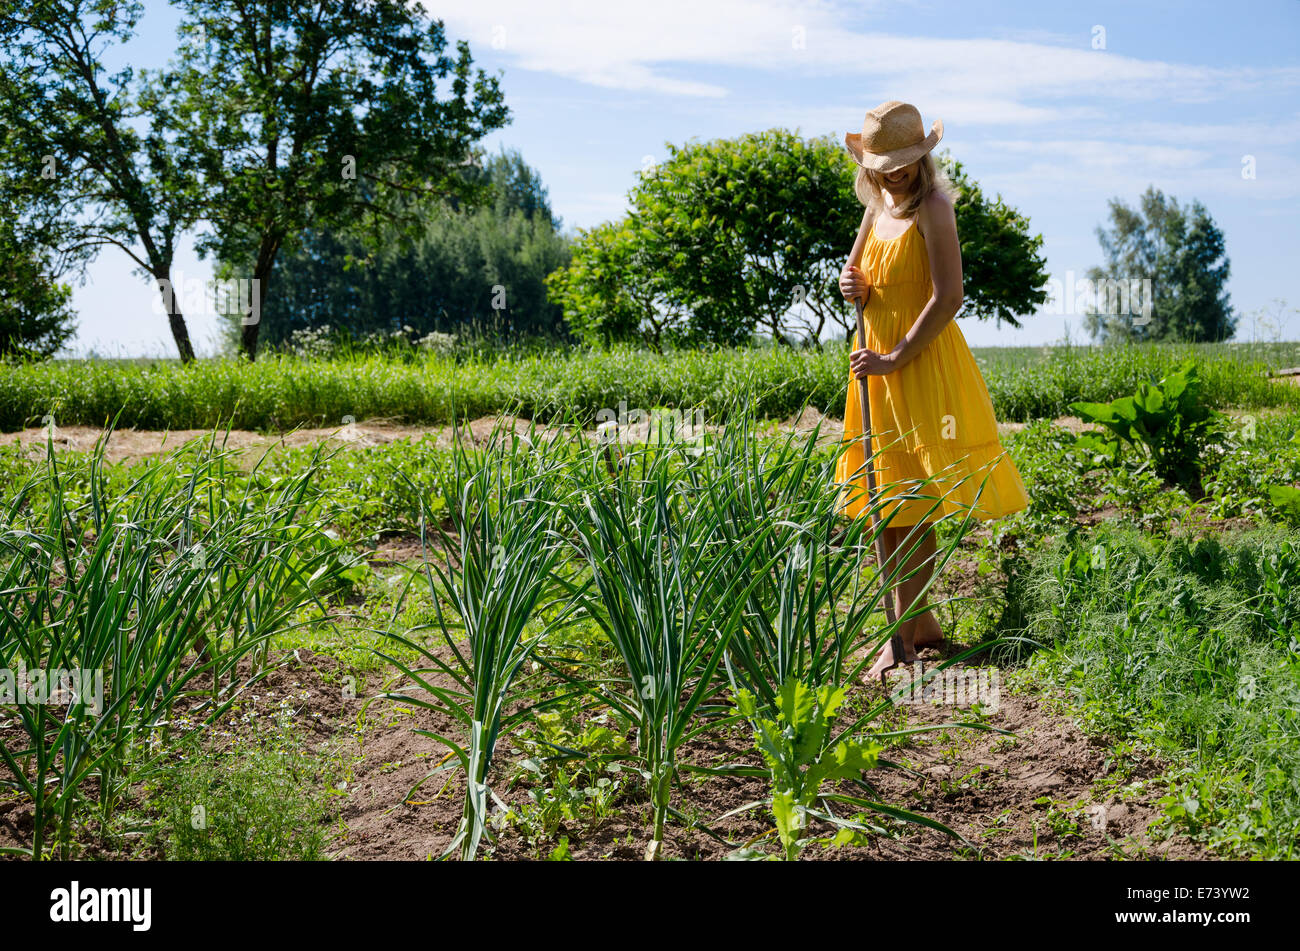 Barefoot gardener woman girl in dress and hat work in garden with hoe between garlic and pea plants. Stock Photo